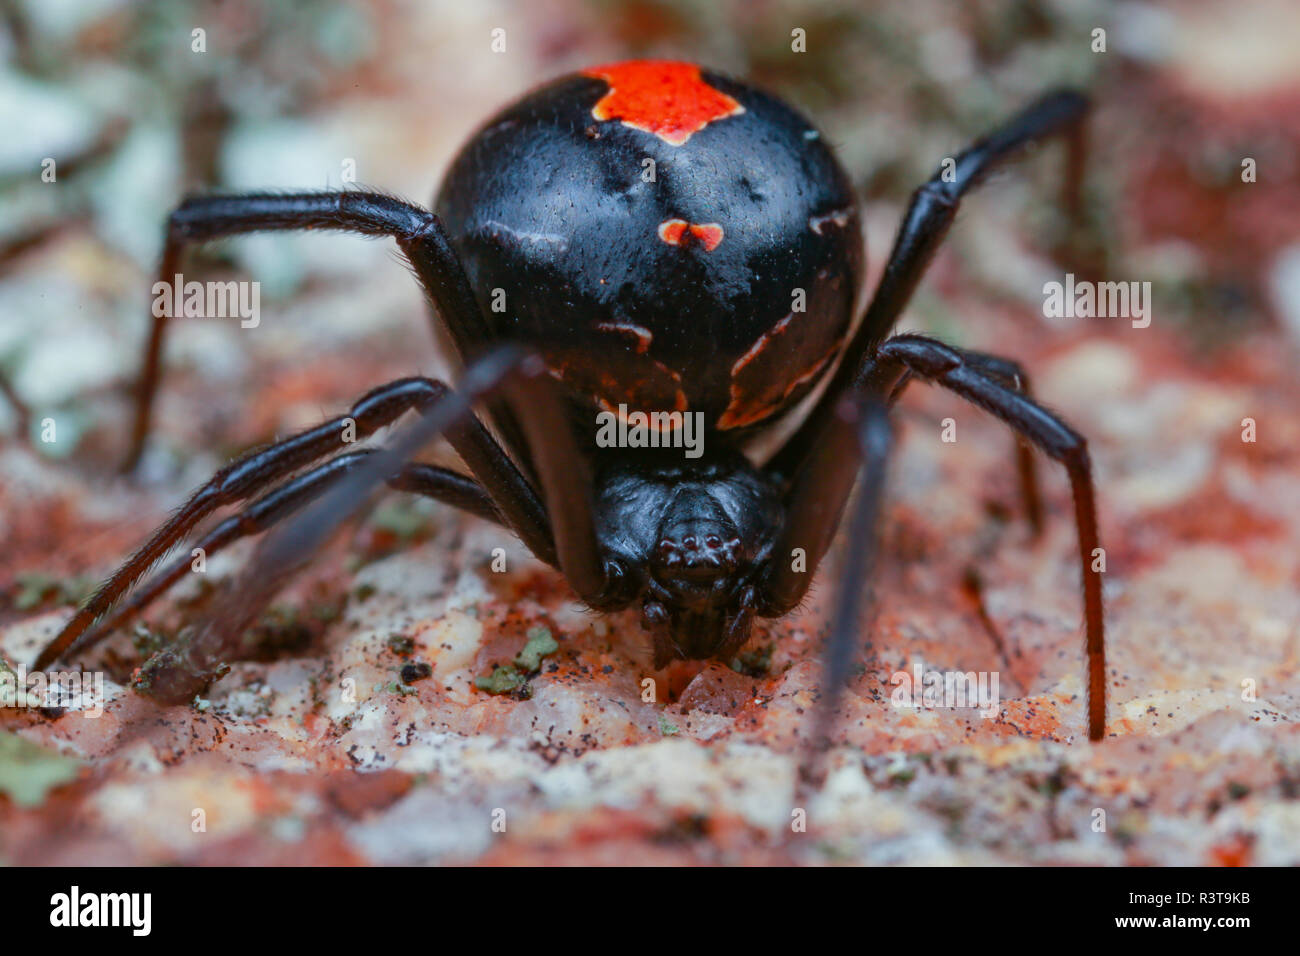 Australian red back spider macro portrait Banque D'Images